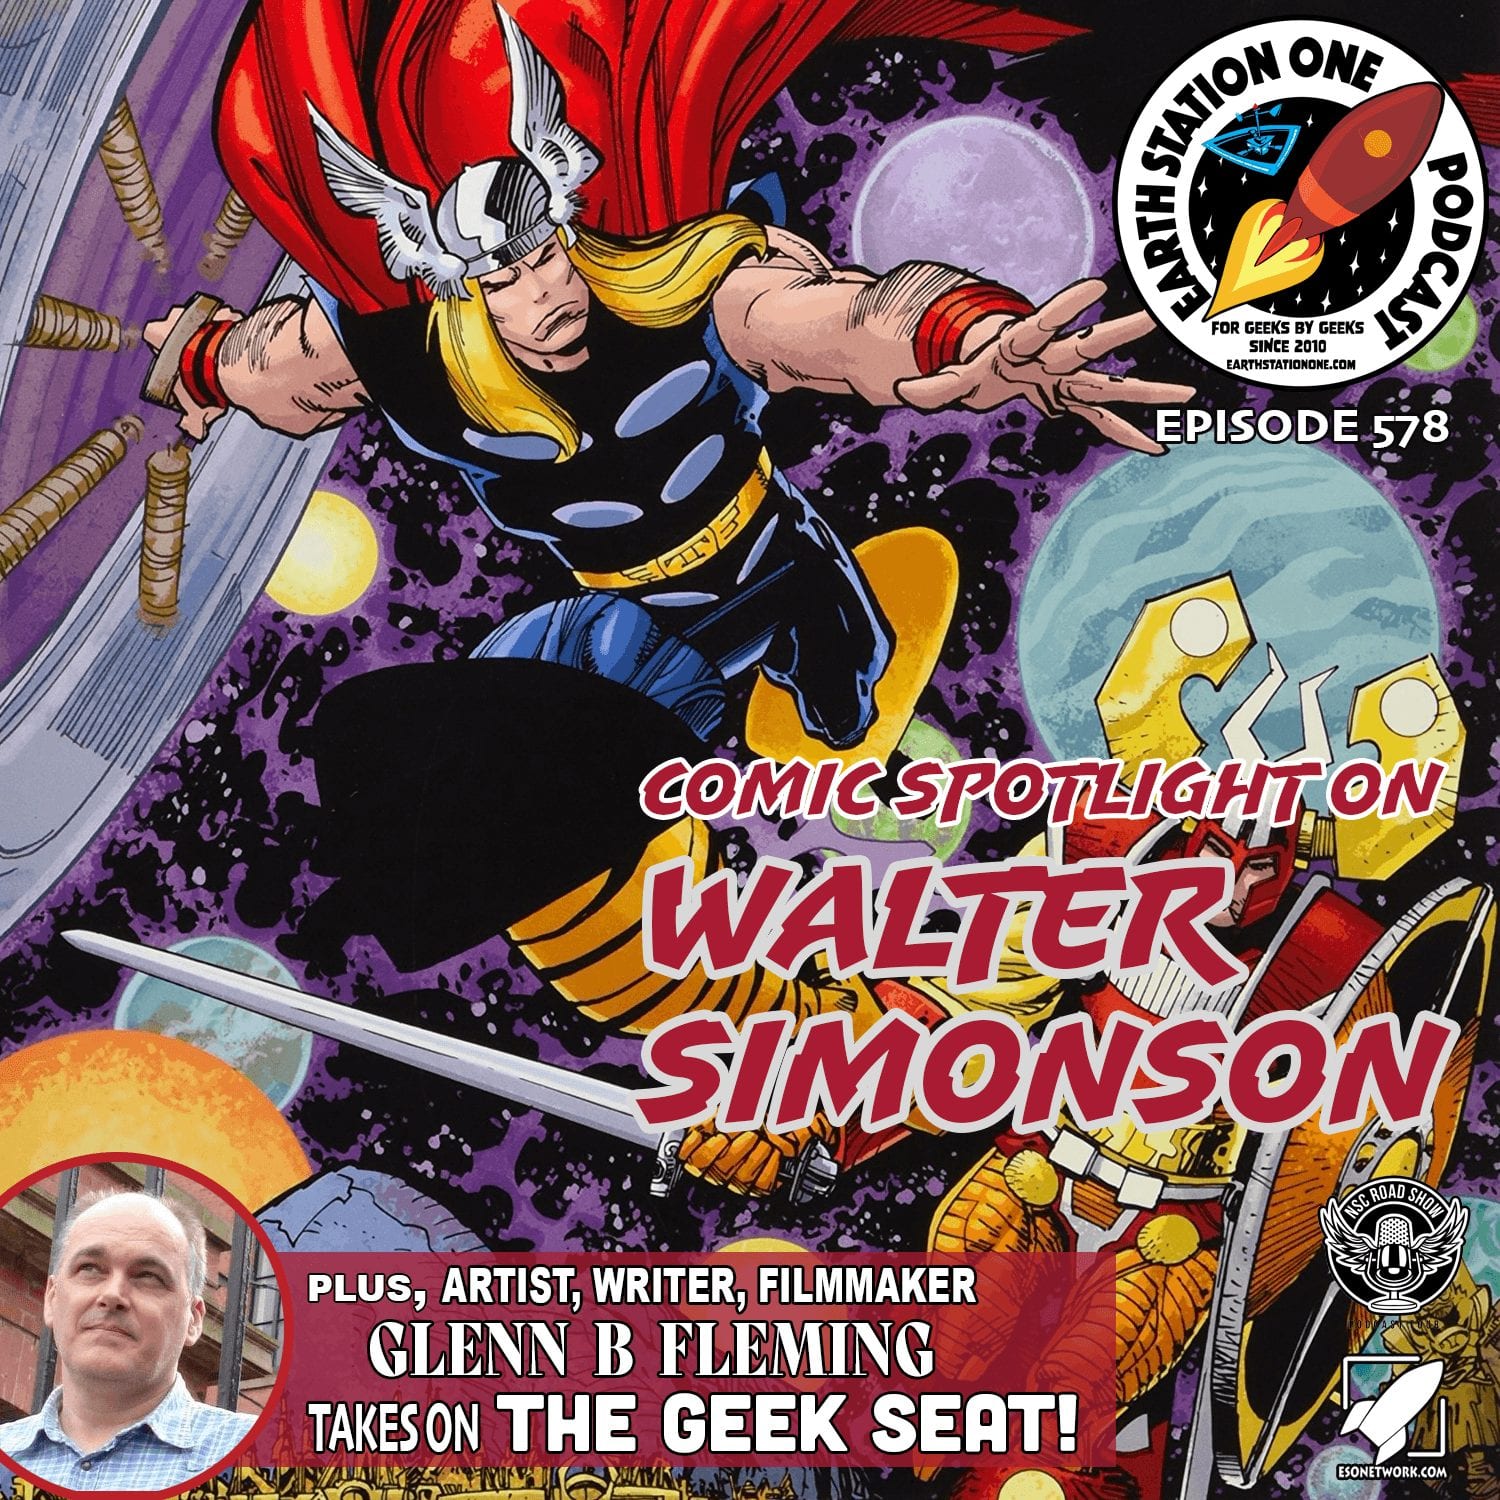 Earth Station One Ep 578 - Comic Spotlight on Walter Simonson